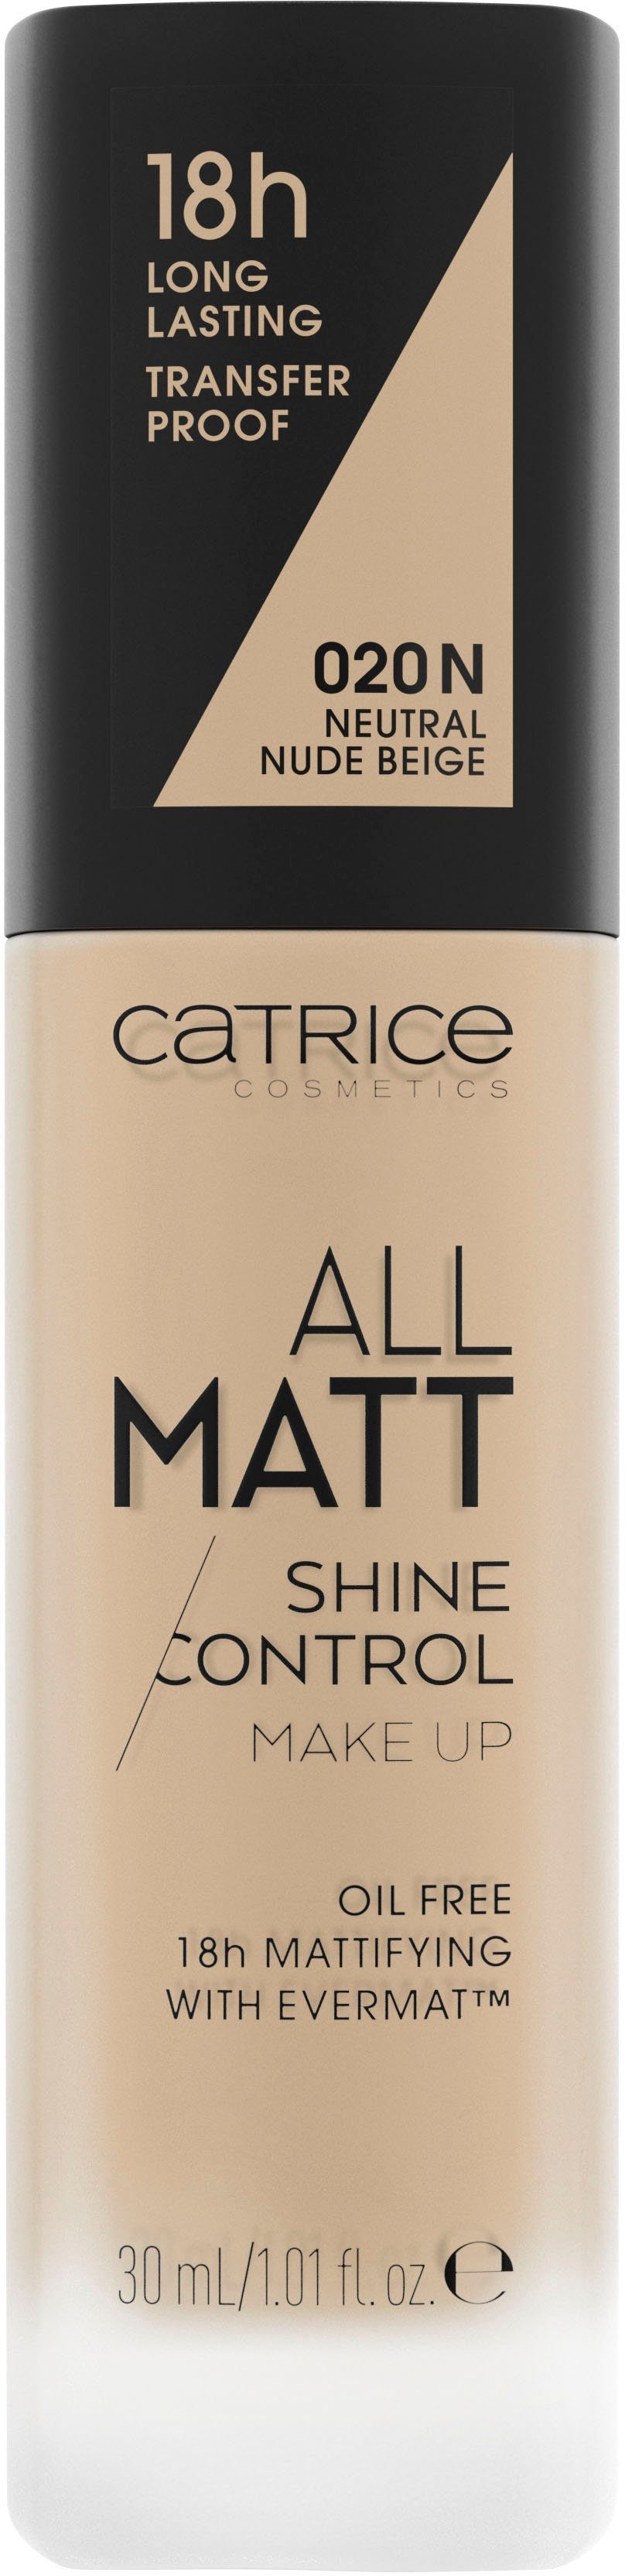 Catrice All Foundation Control Matt Up Neutral Shine Nude Beige Make